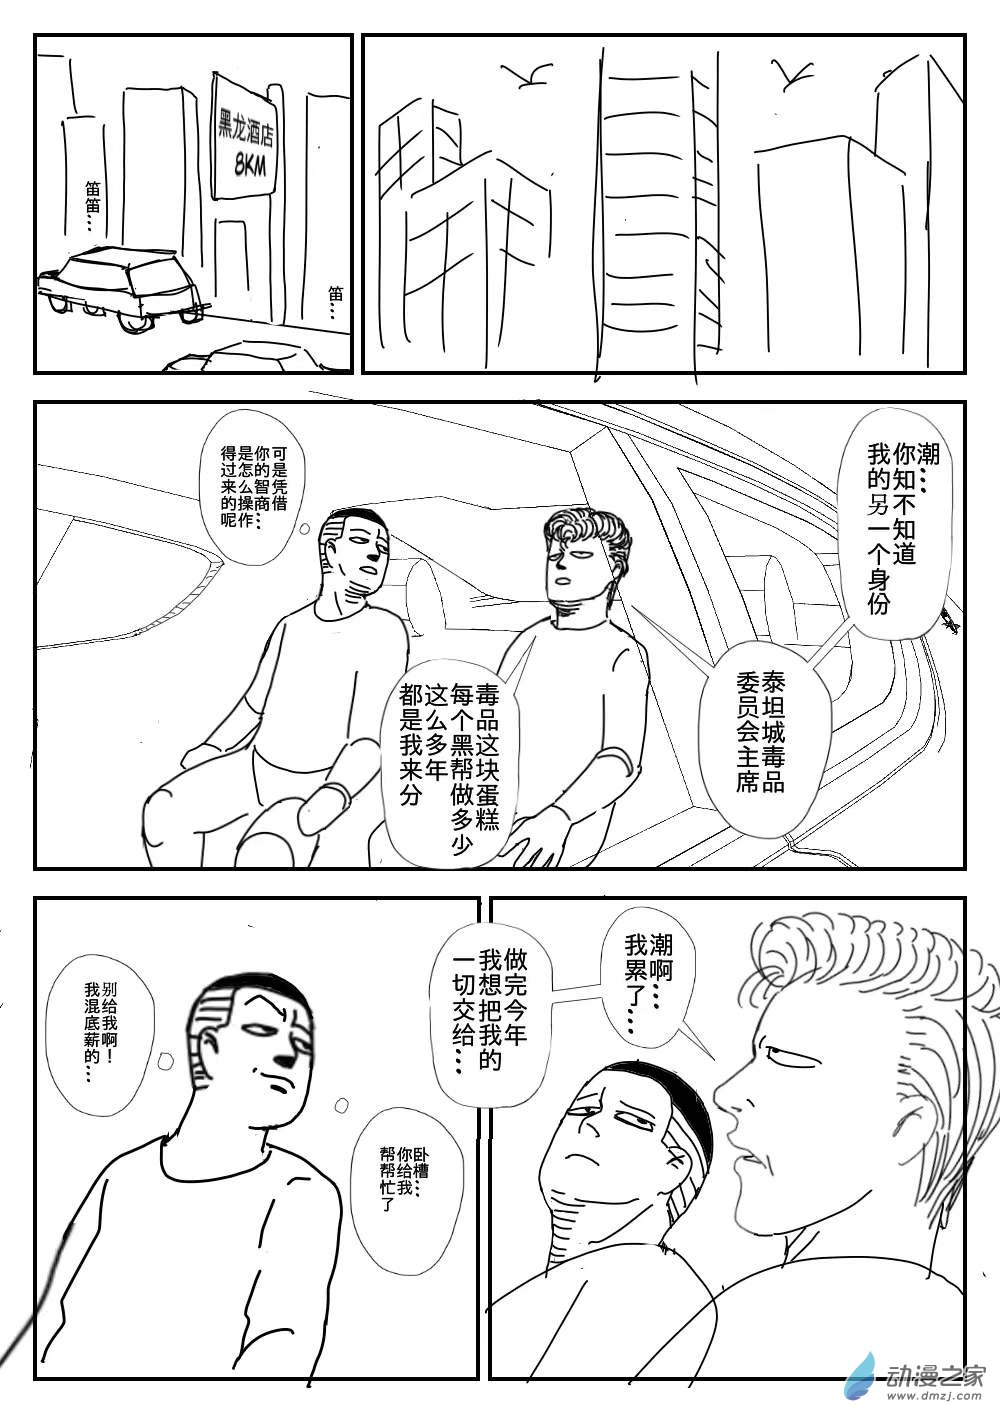 K神的短篇漫畫集 - 01 臥底阿潮 - 3